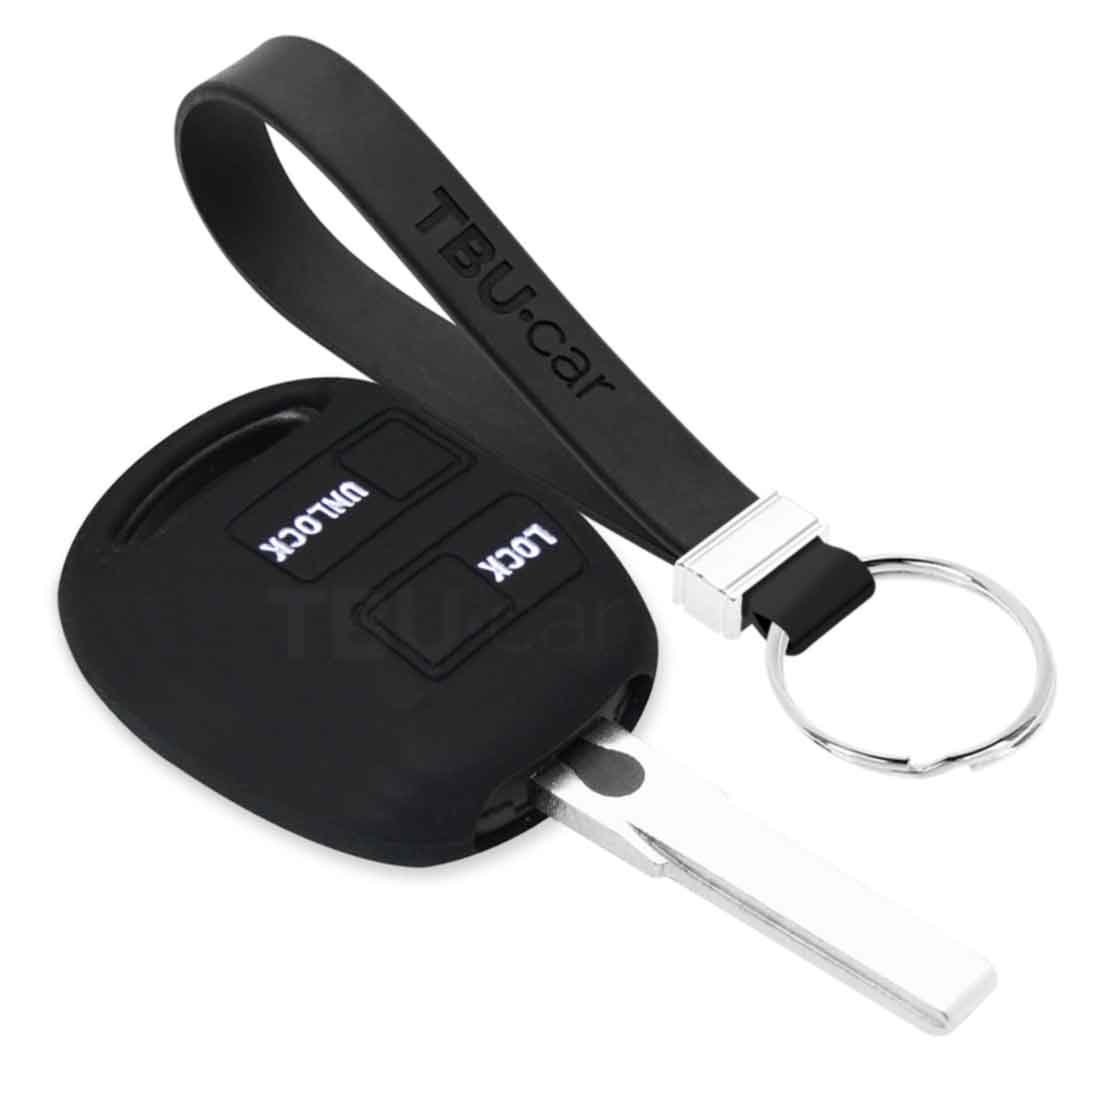 TBU car TBU car Autoschlüssel Hülle kompatibel mit Lexus 2 Tasten - Schutzhülle aus Silikon - Auto Schlüsselhülle Cover in Schwarz